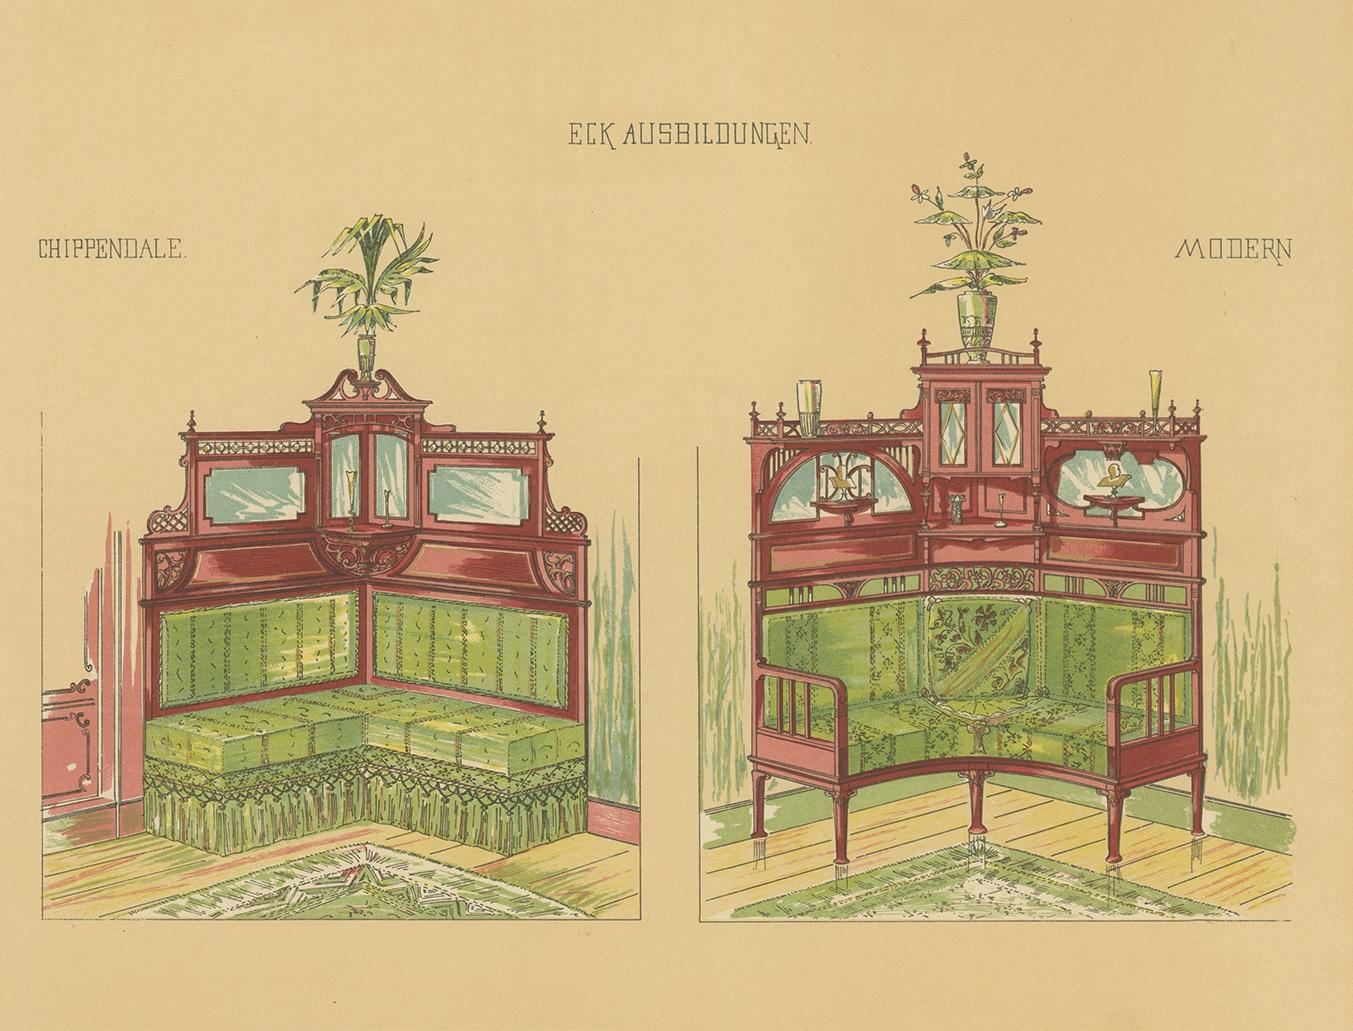 Antique print titled 'Eck Ausbildungen - Chippendale - Modern'. Lithograph of corner furniture. This print originates from 'Det Moderna Hemmet' by Johannes Kramer. Published by Ferdinand Hey'l, circa 1910.